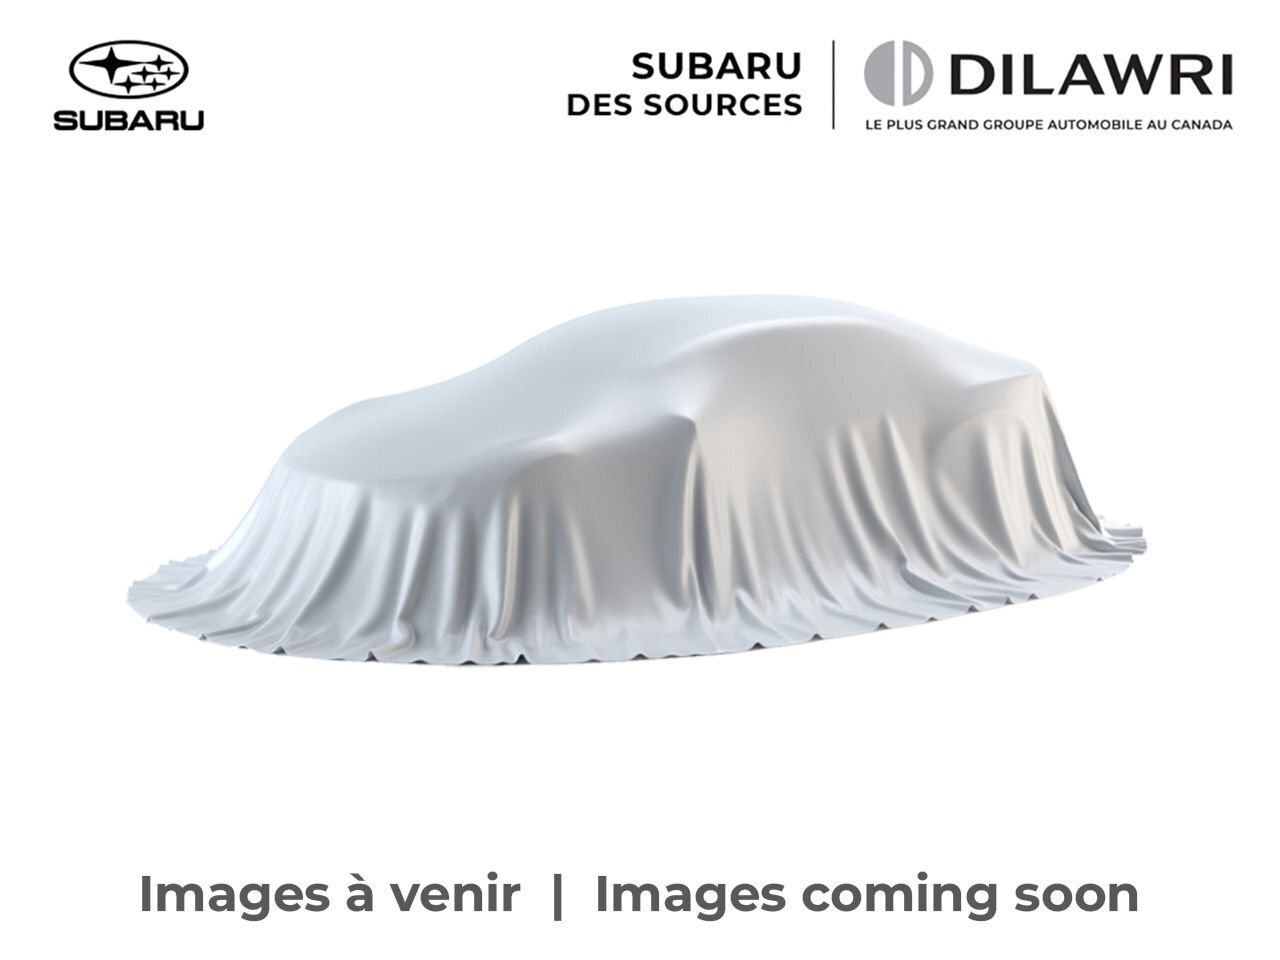 2022 Subaru Crosstrek Limited EyeSight 2.5L AWD Nav/GPS, Cuir/Leather  +